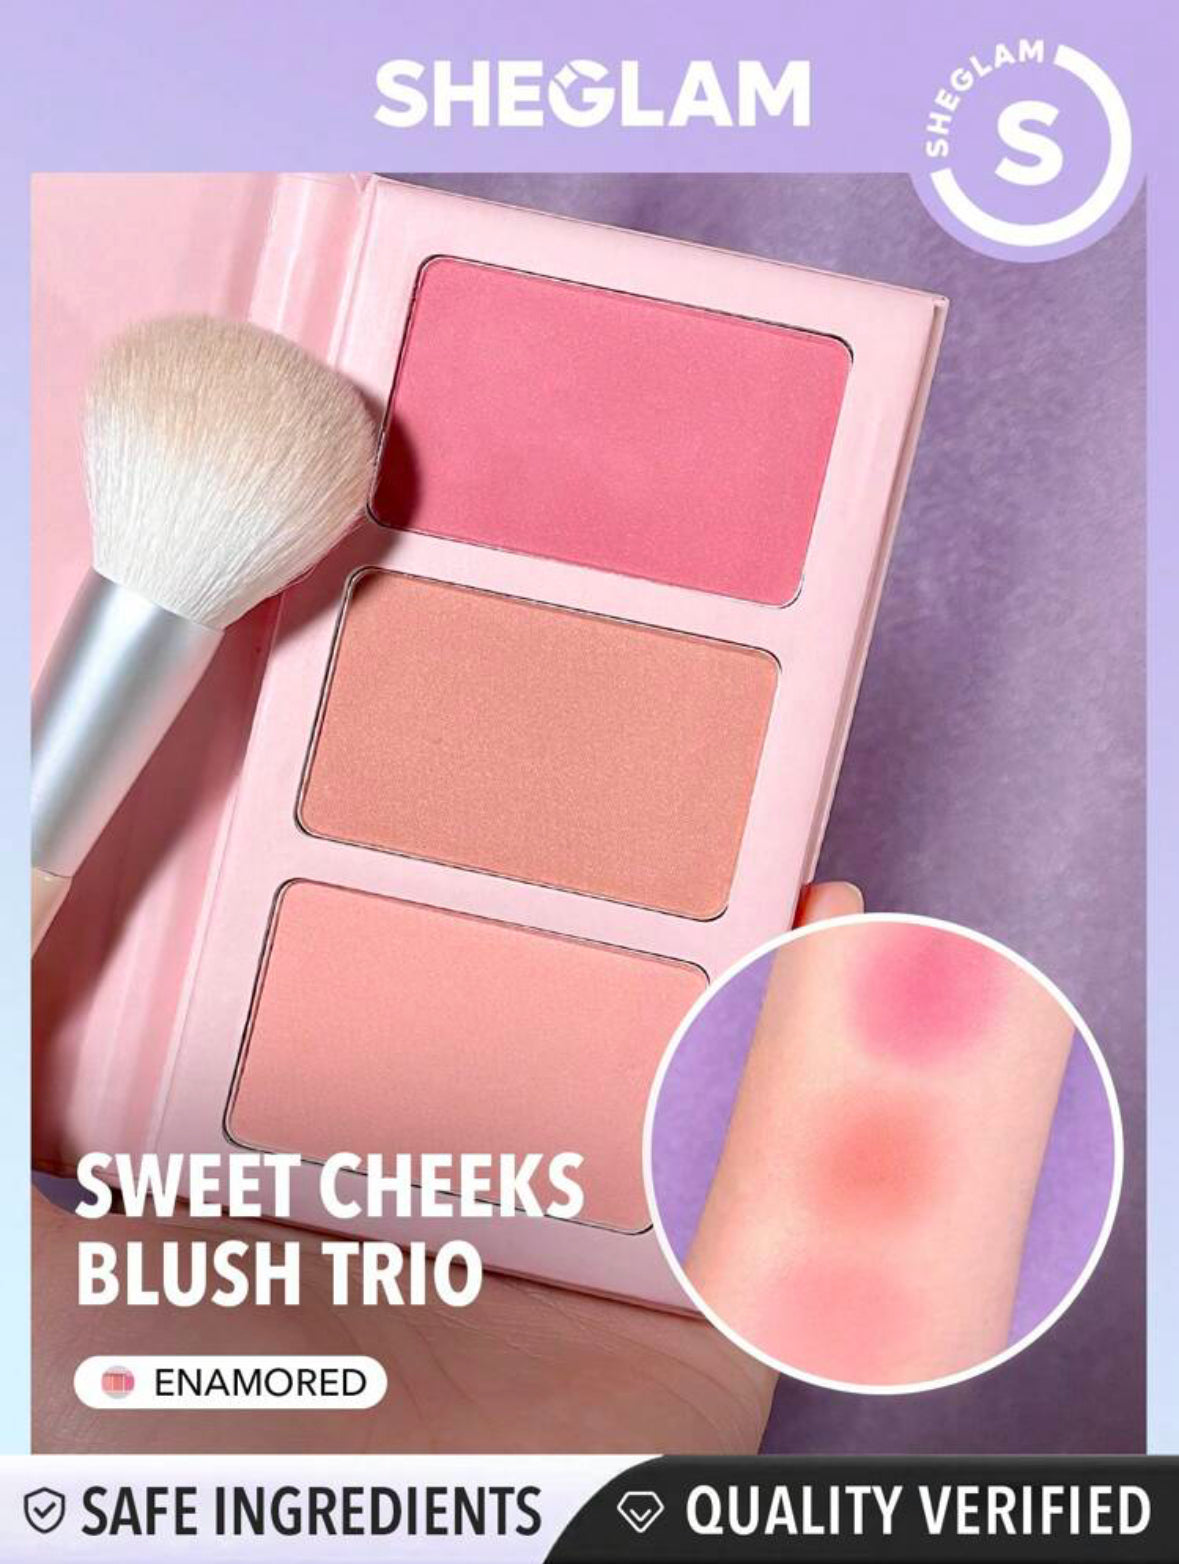 Sheglam sweet cheek blush trio - 3 types